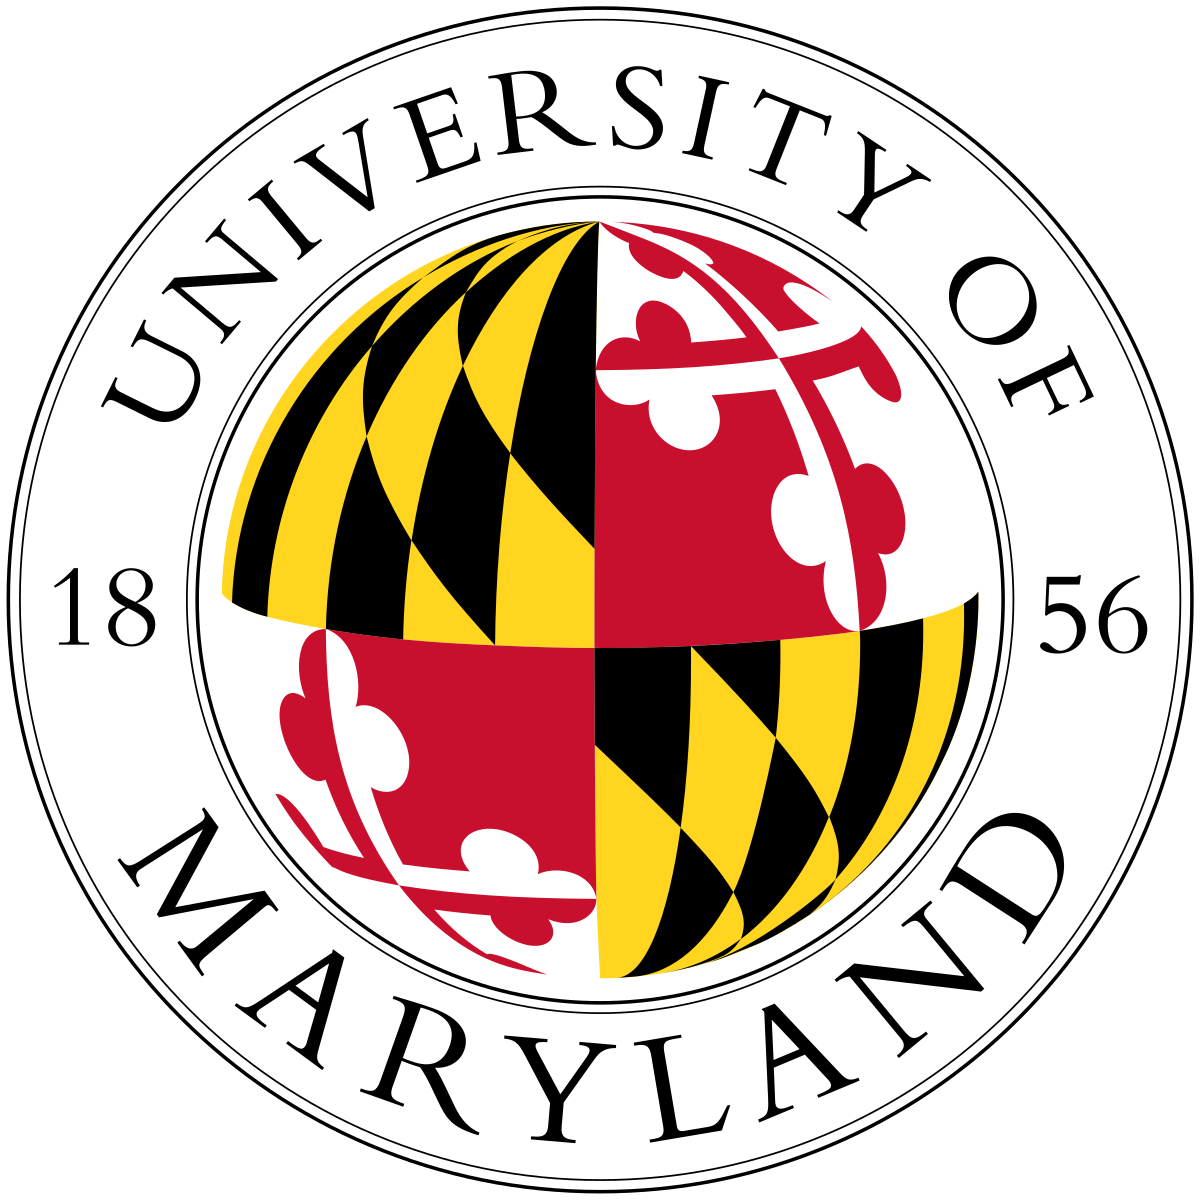 University Of Maryland College Park Public Health Degree Programs Accreditation Applying